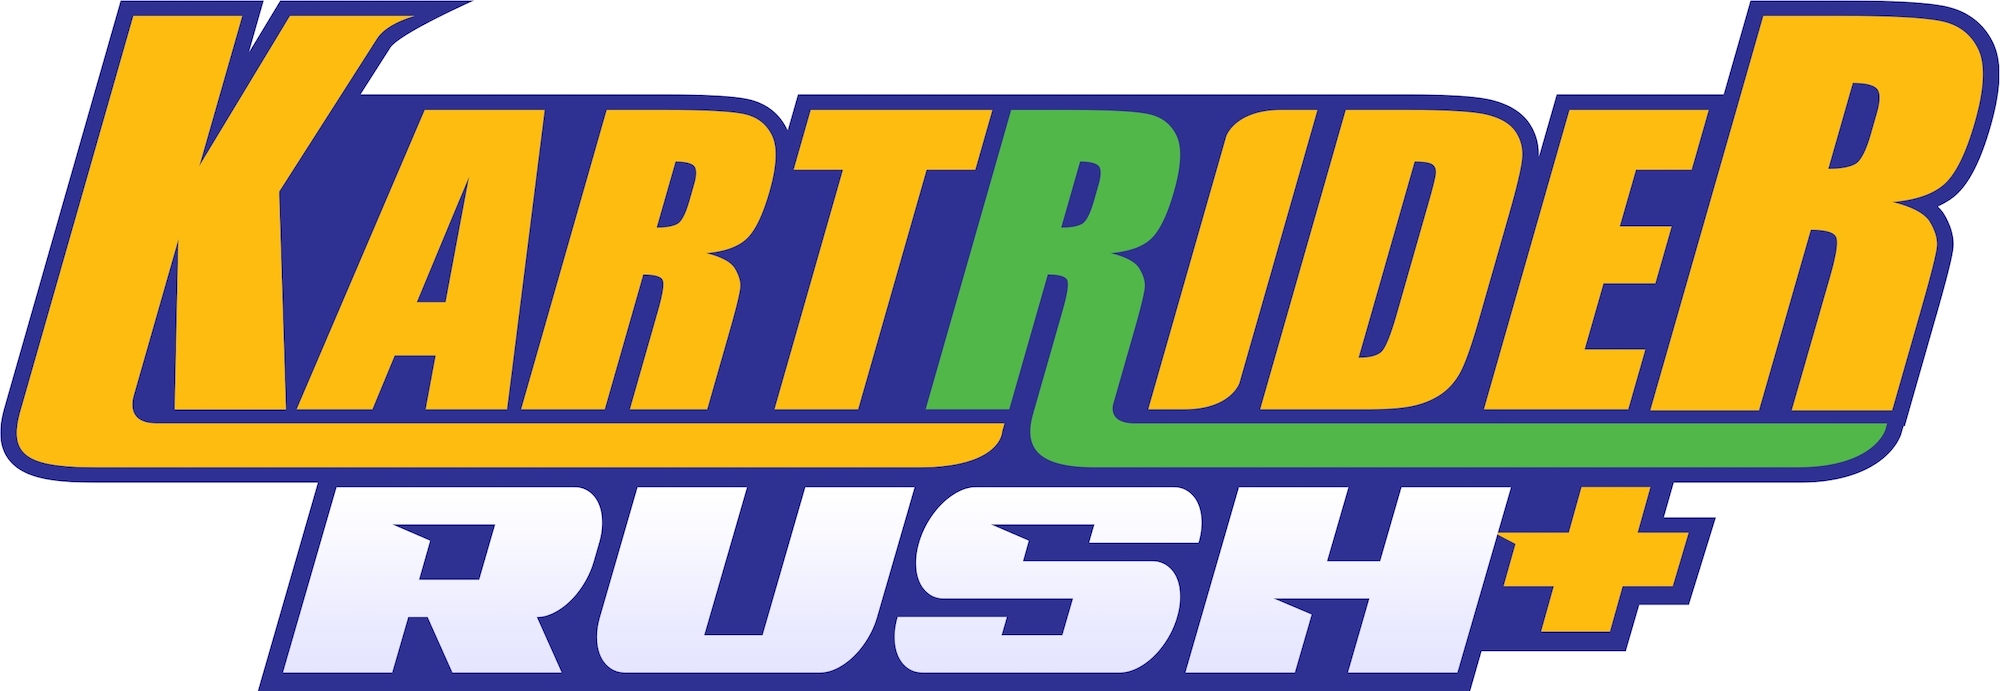 kartrider_rush+_logo